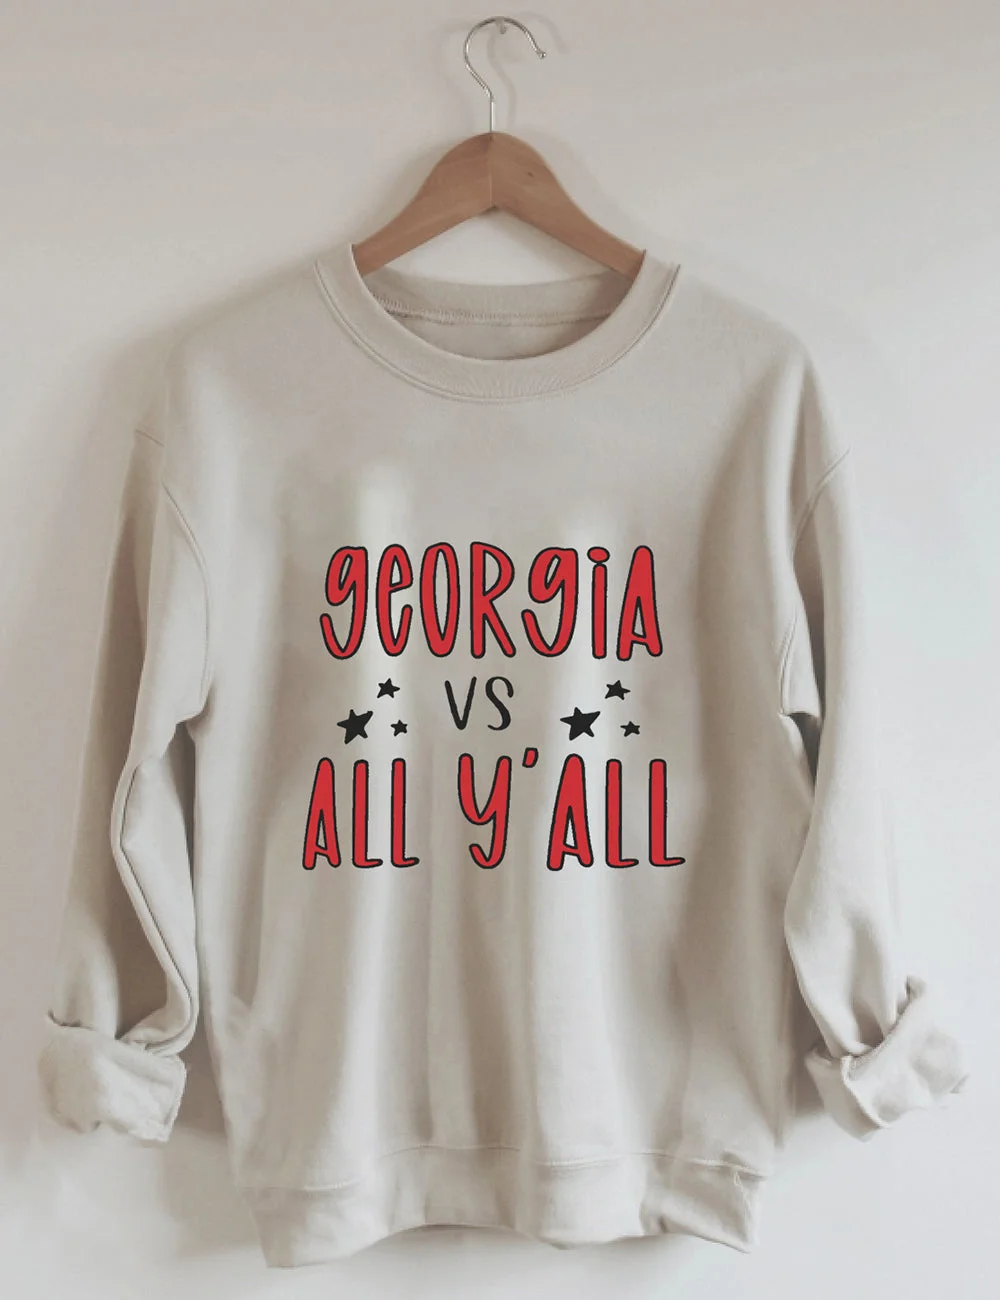 Georgia VS All Y'all Sweatshirt